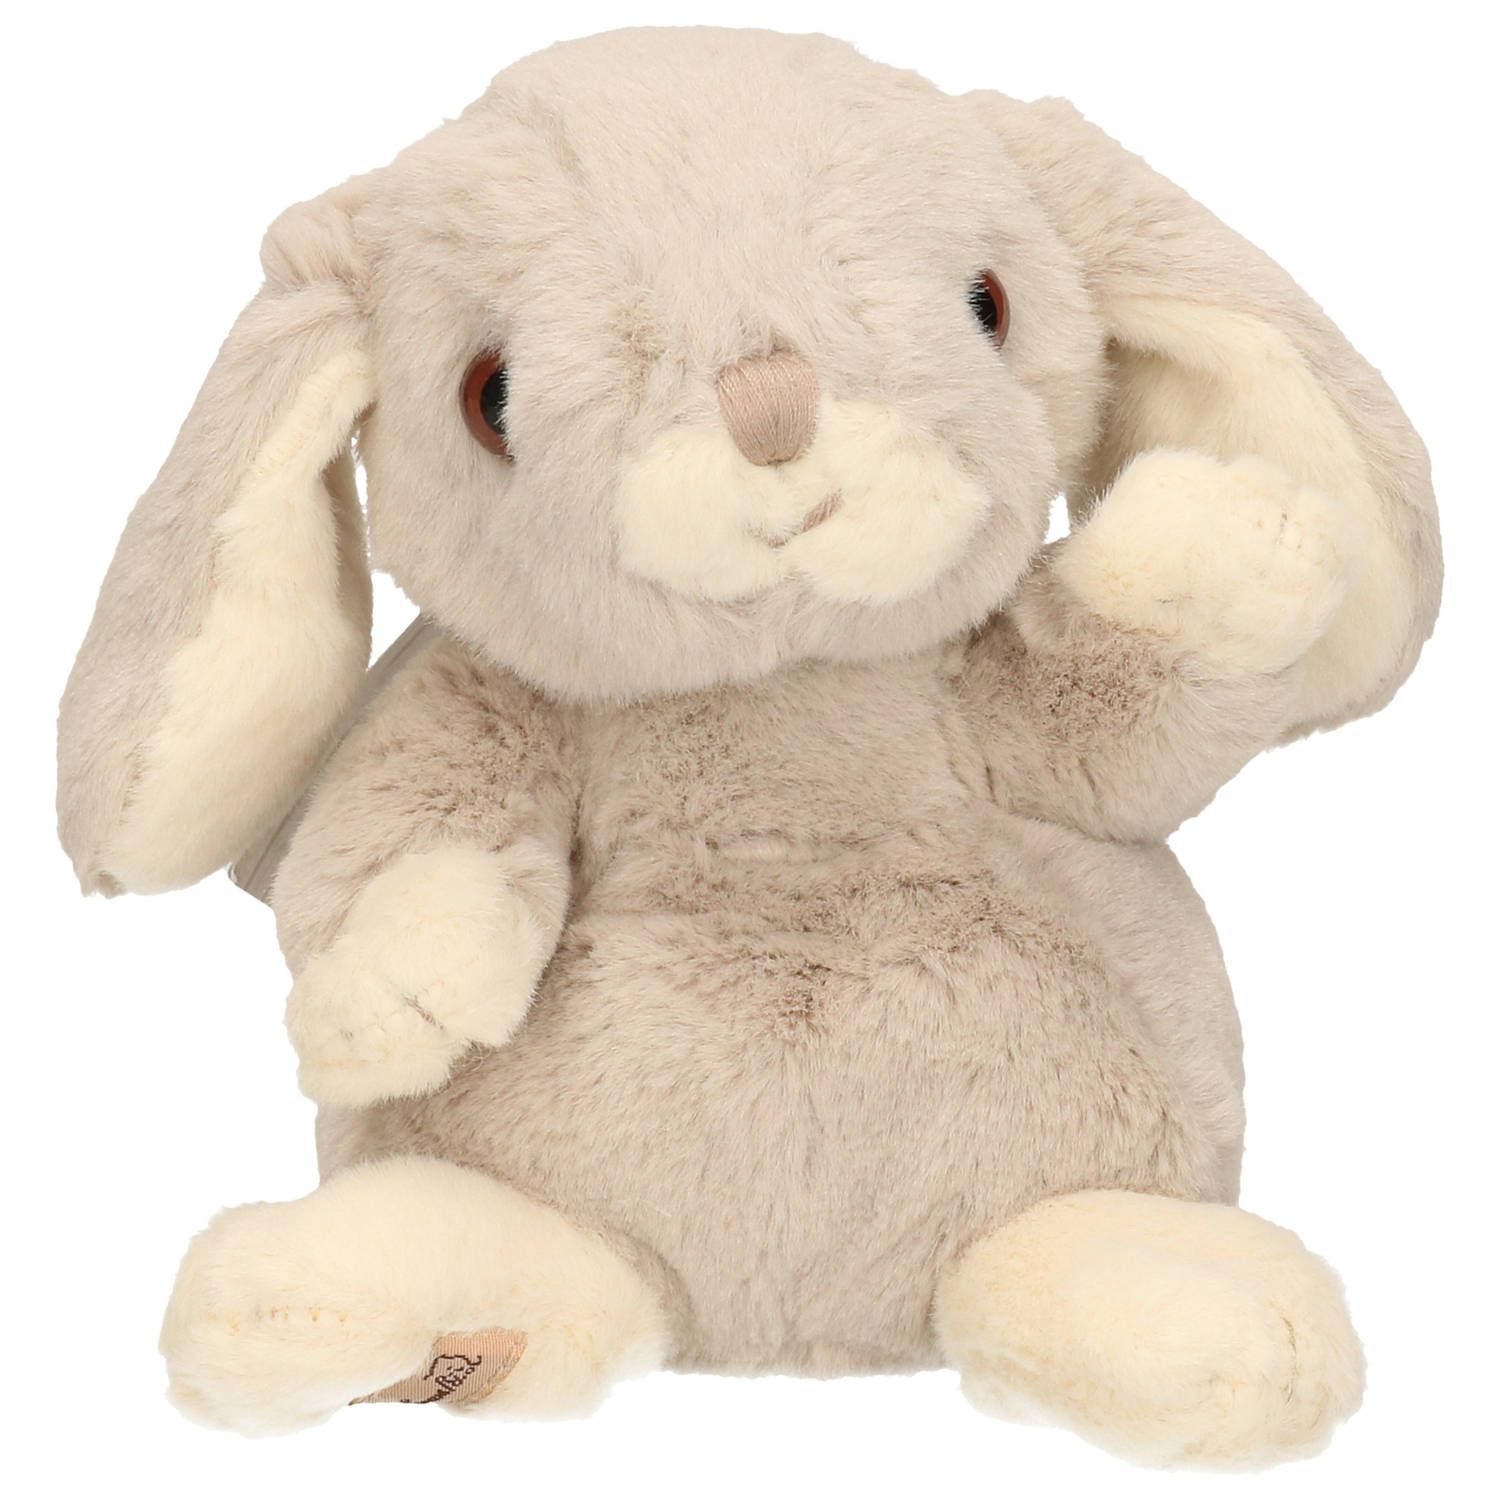 Bukowski pluche konijn knuffeldier - lichtgrijs - zittend - 15 cm - Luxe kwaliteit knuffels